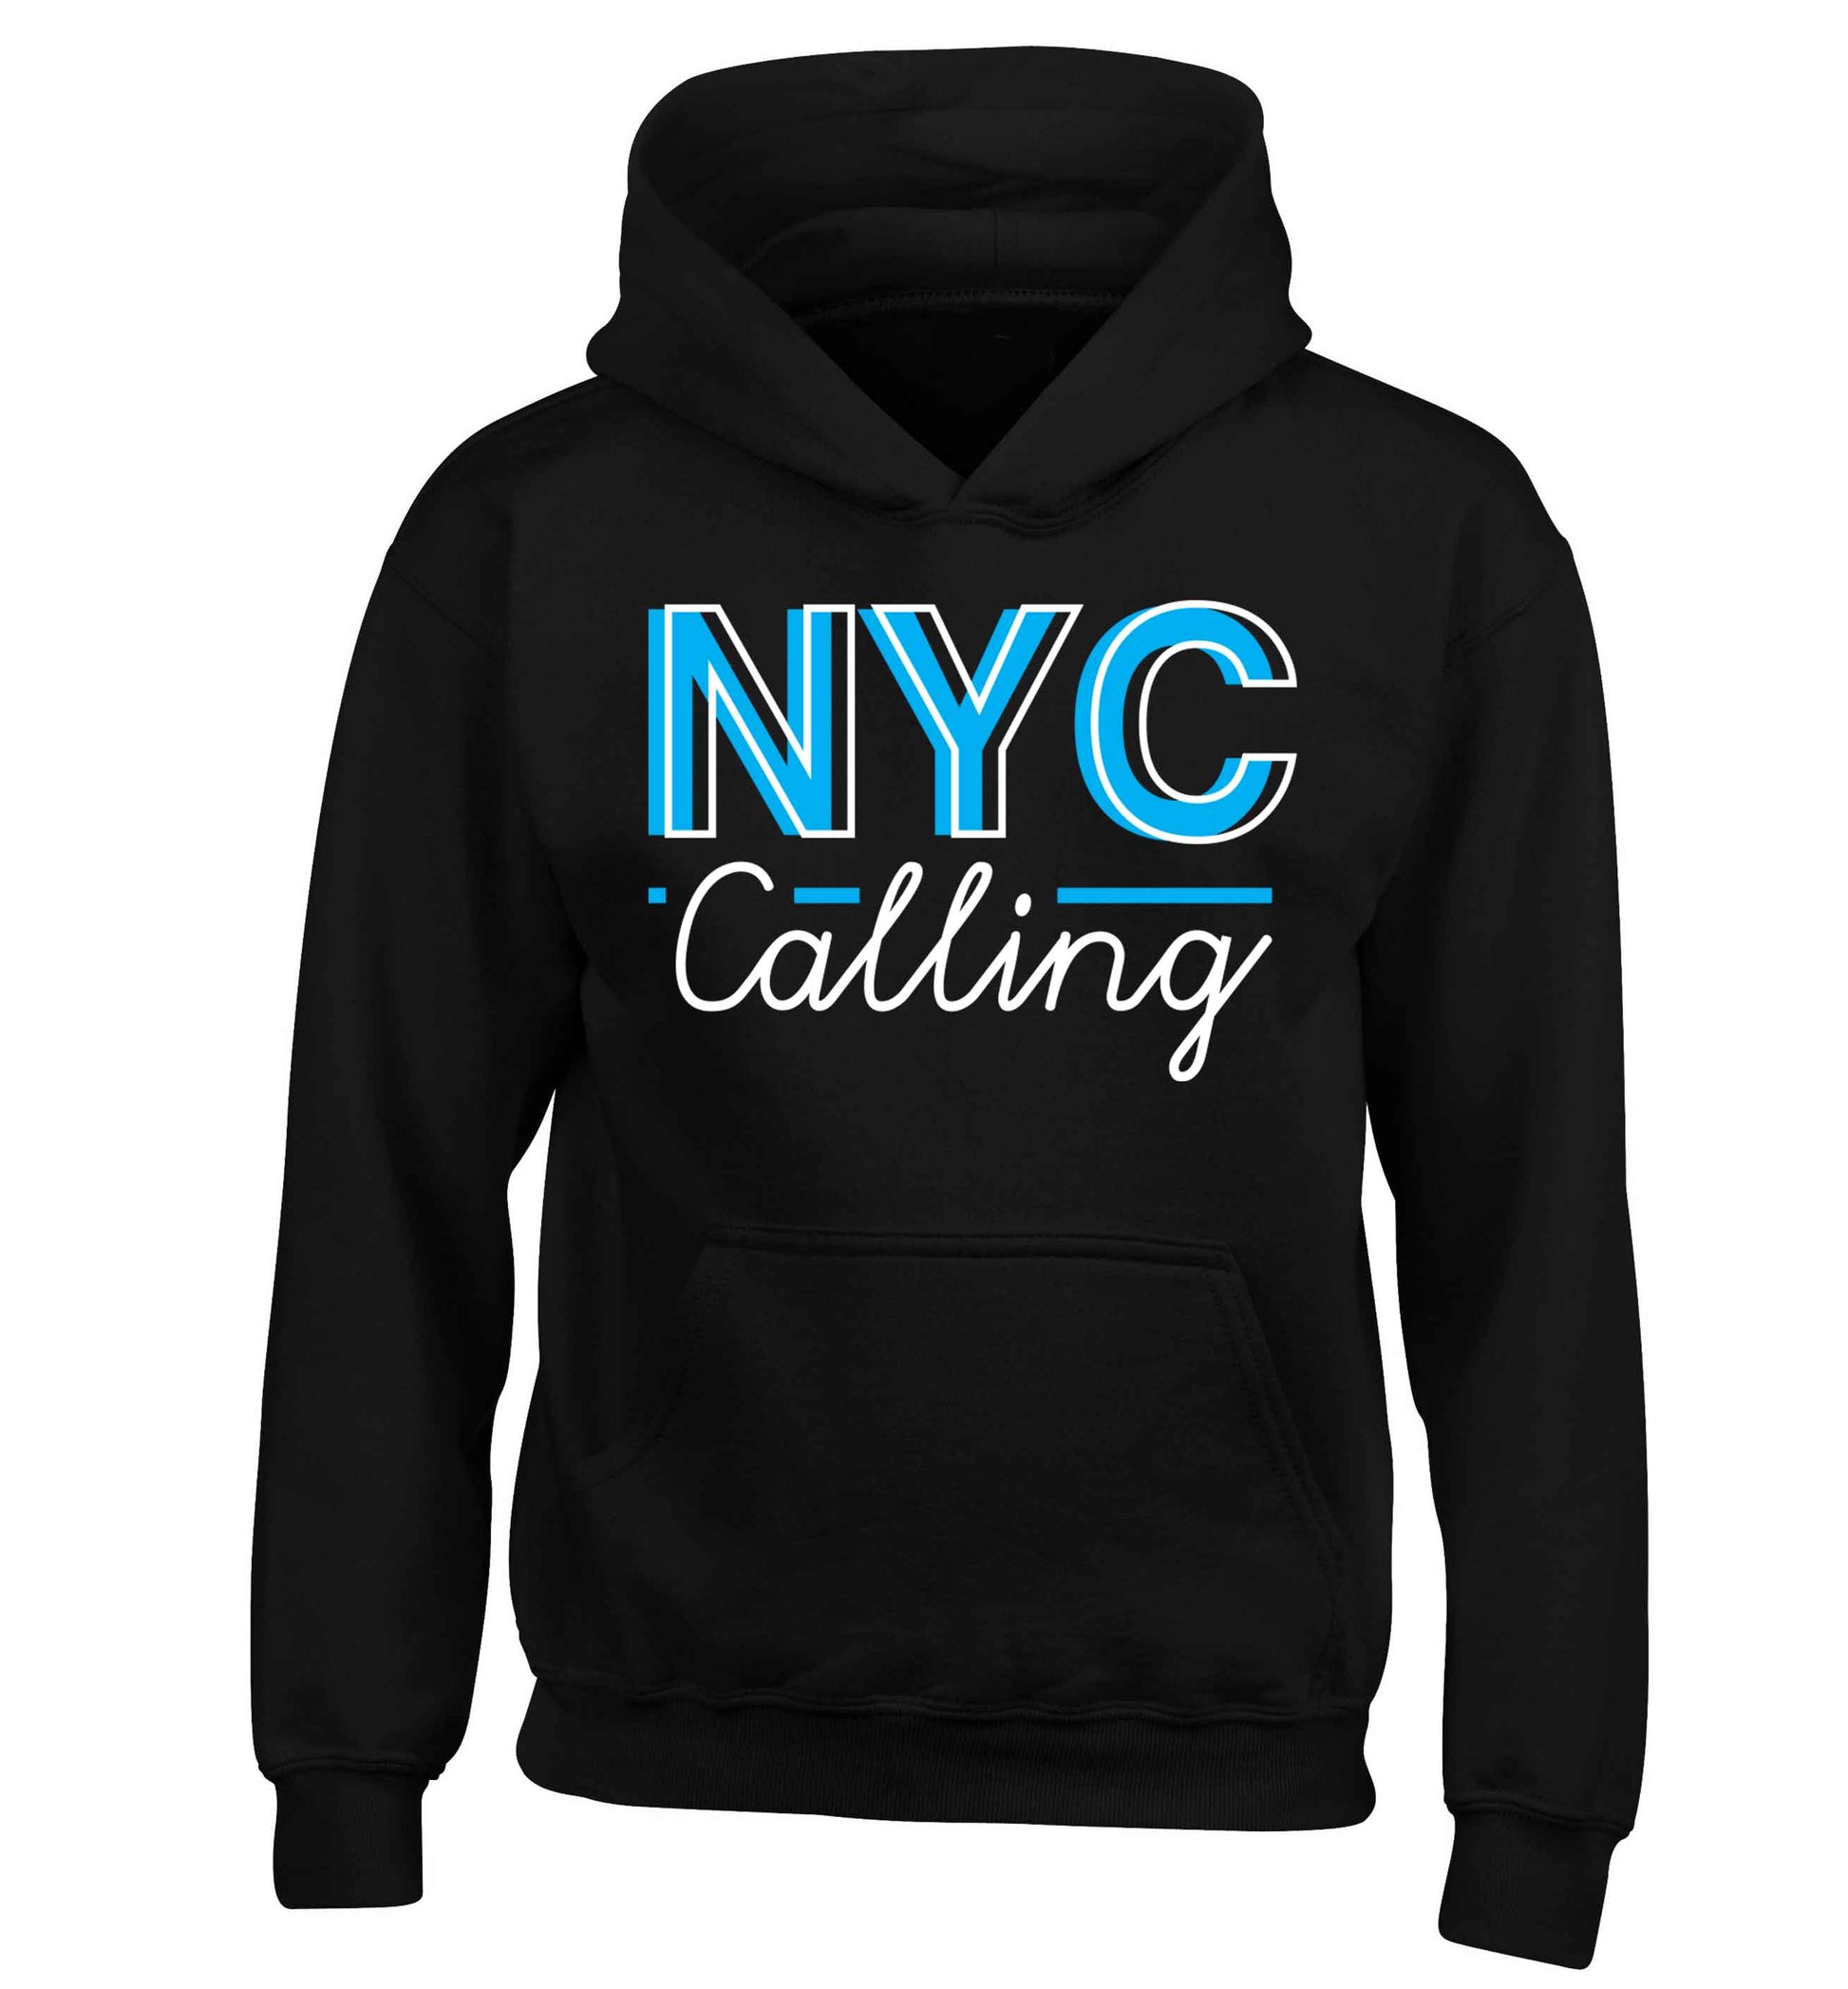 NYC calling children's black hoodie 12-13 Years